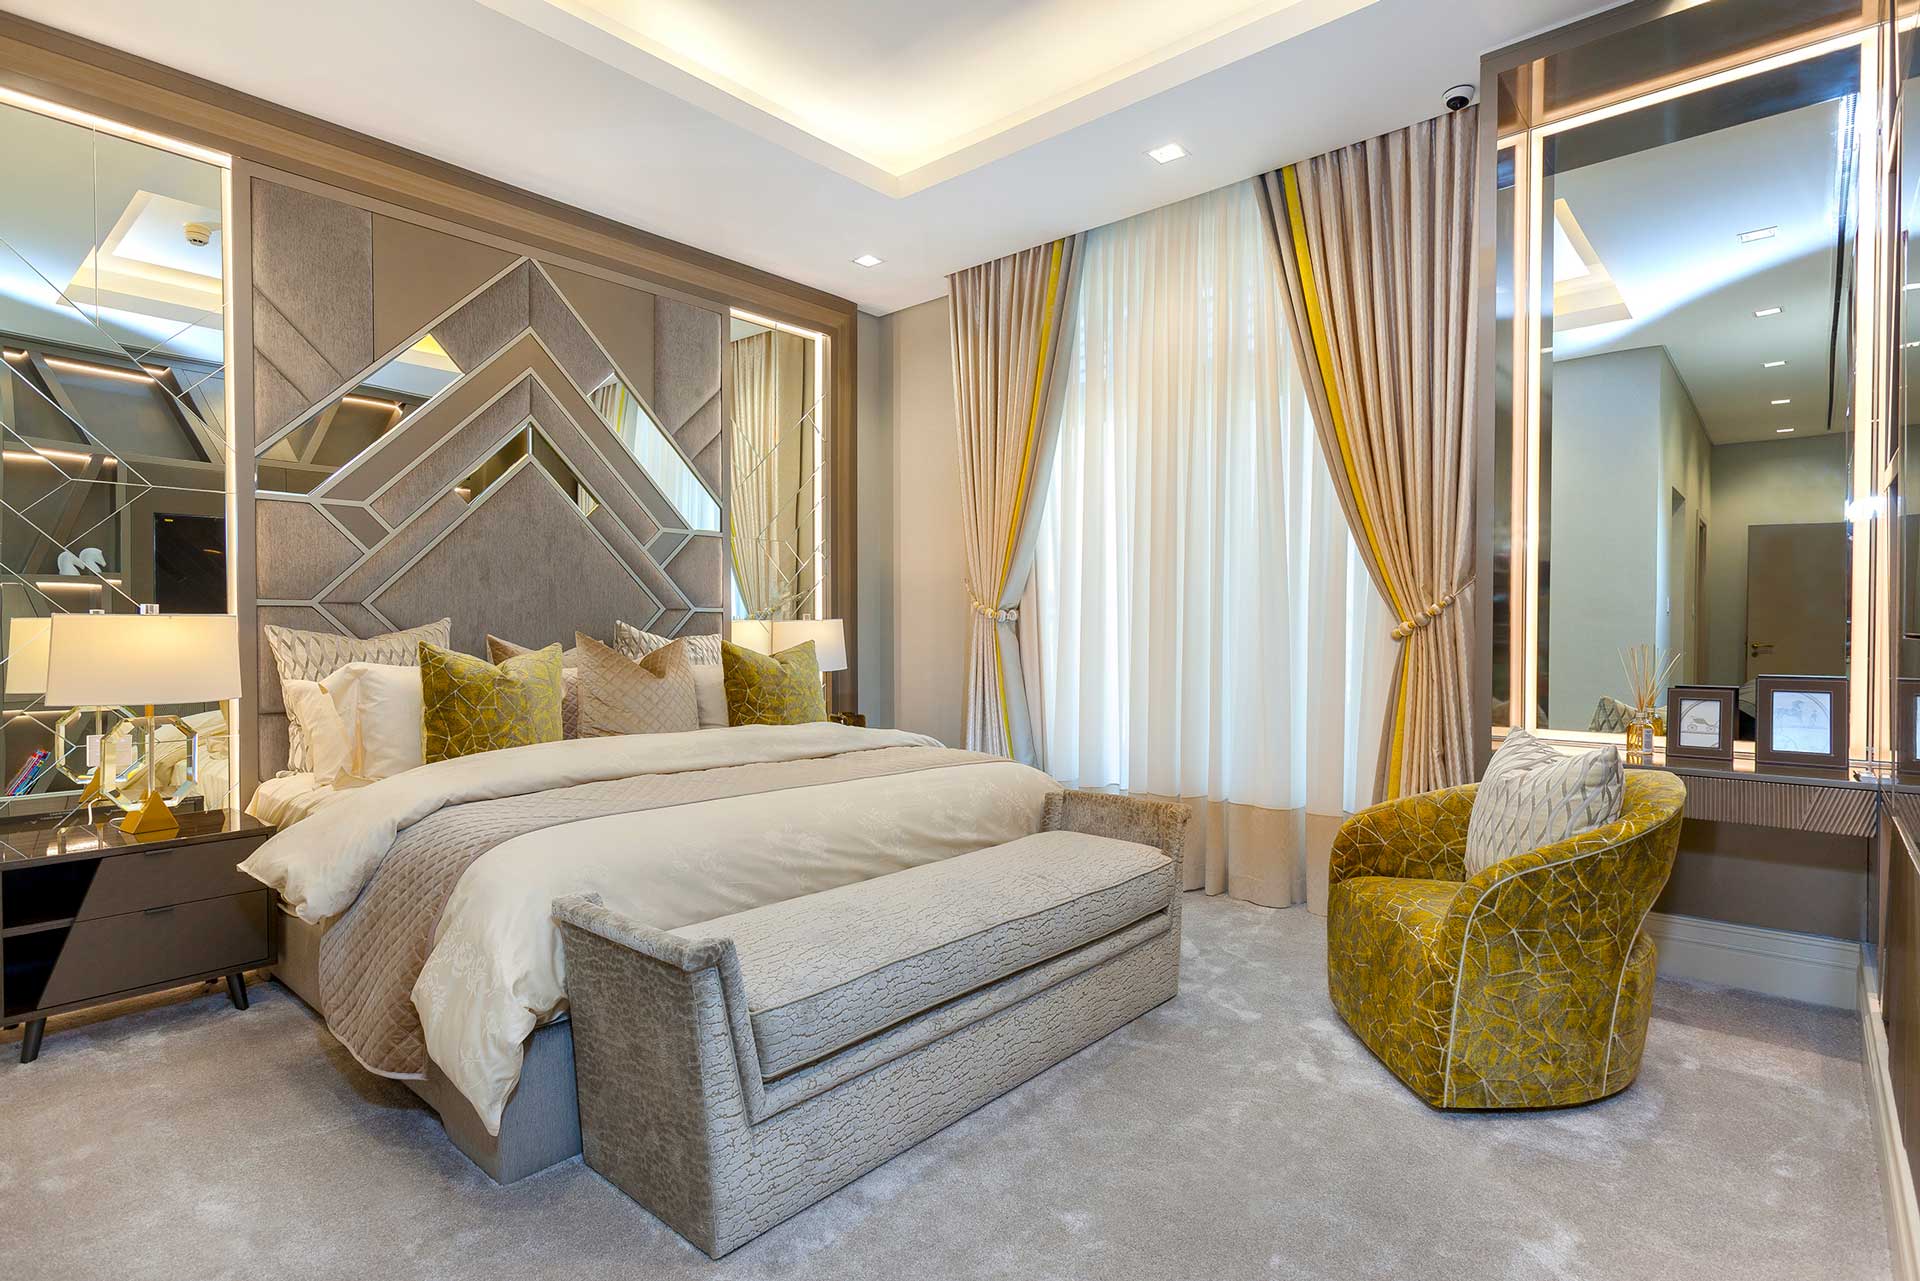 The Luxury Of Sleep: Opulent Bedroom Designs